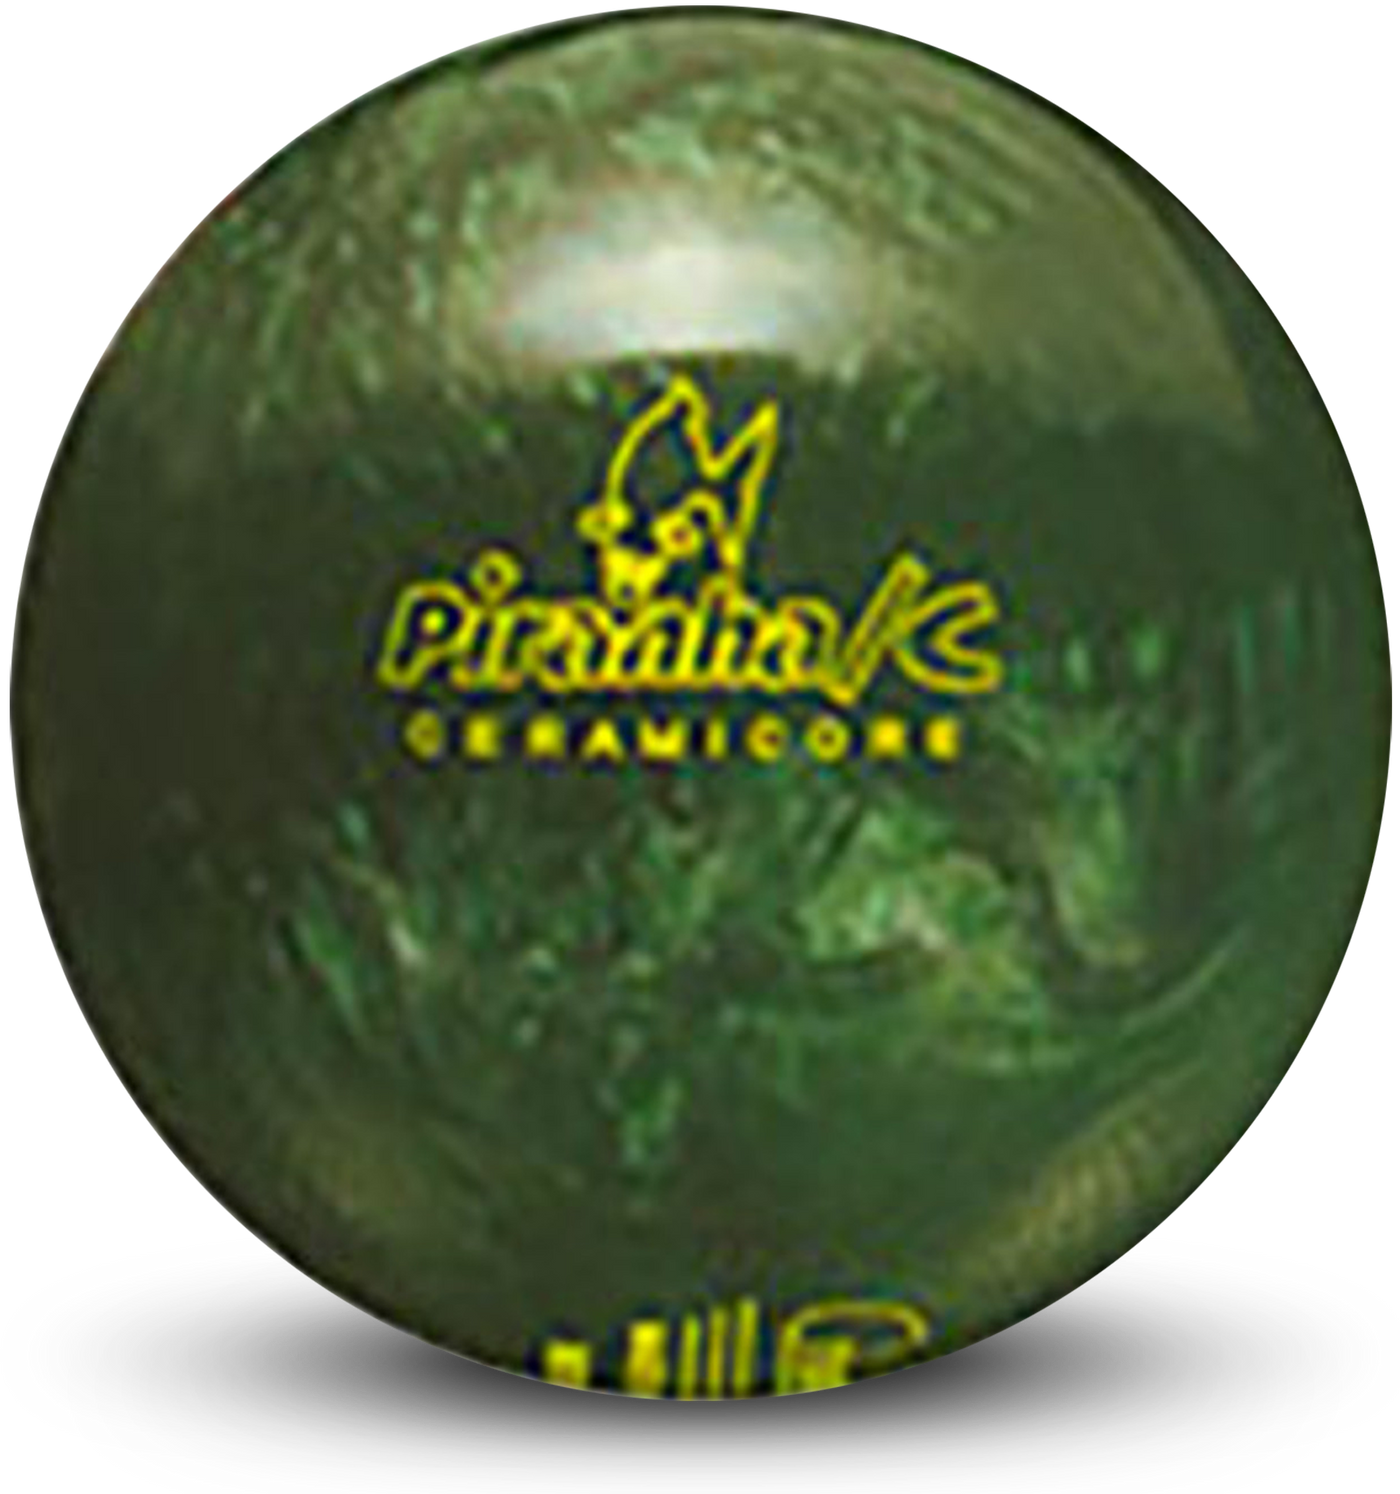 Piranha/C Pearl Bowling Ball